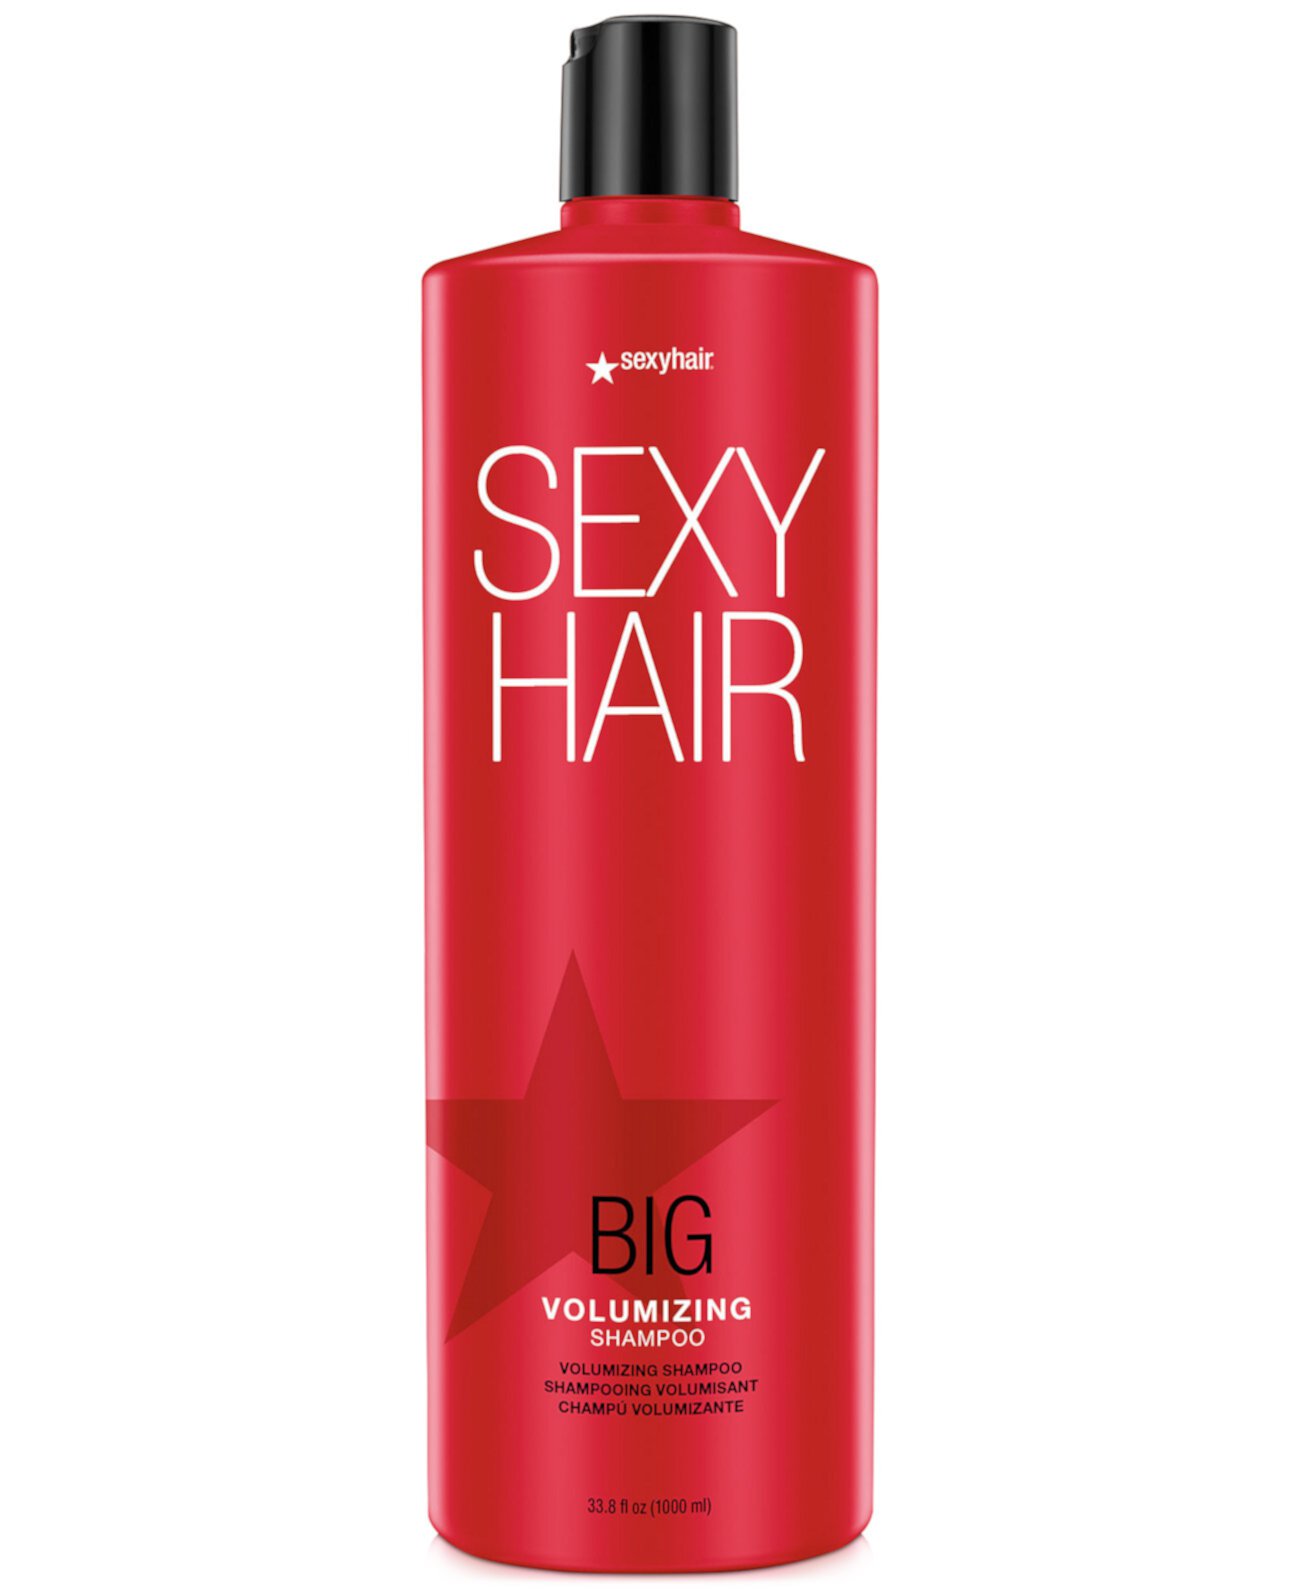 Шампунь для увеличения объема Big Sexy Hair, 33,8 унции, от PUREBEAUTY Salon & Spa Sexy Hair